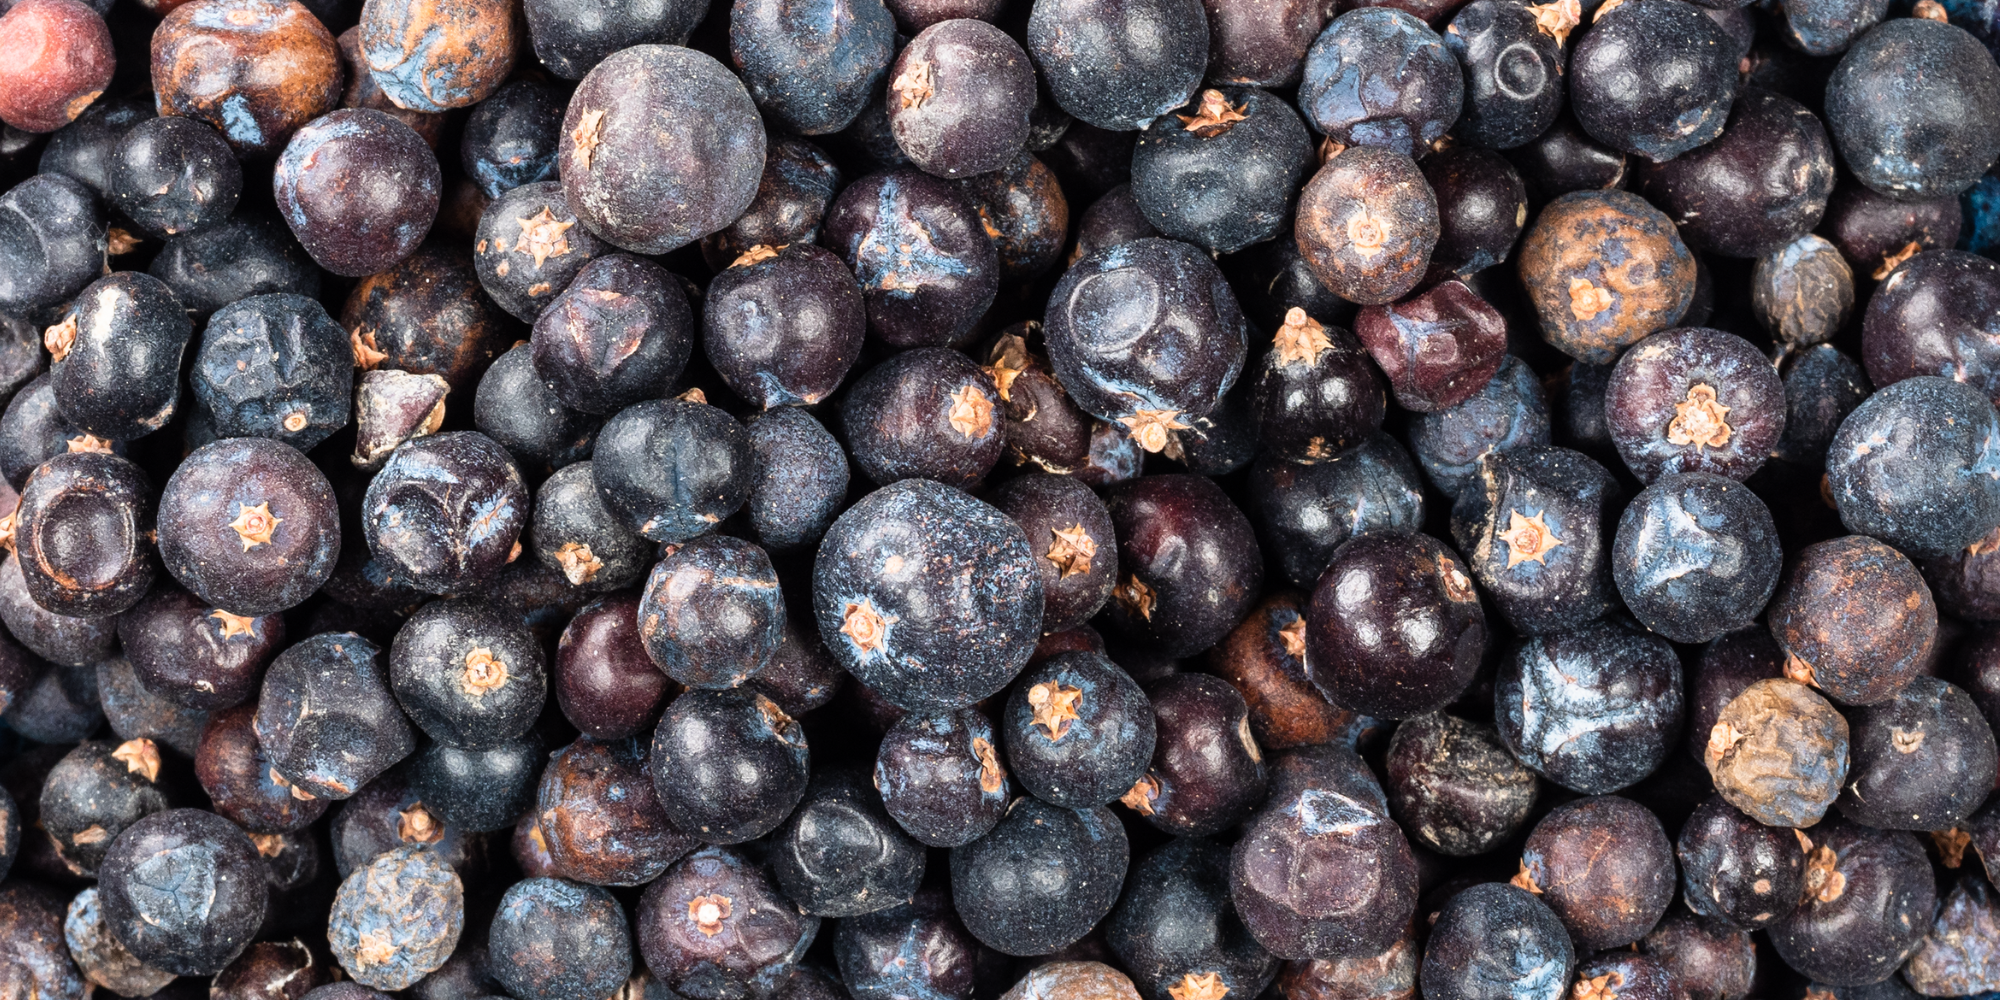 Nim’s Premium Dried Whole Juniper Berries (25g)